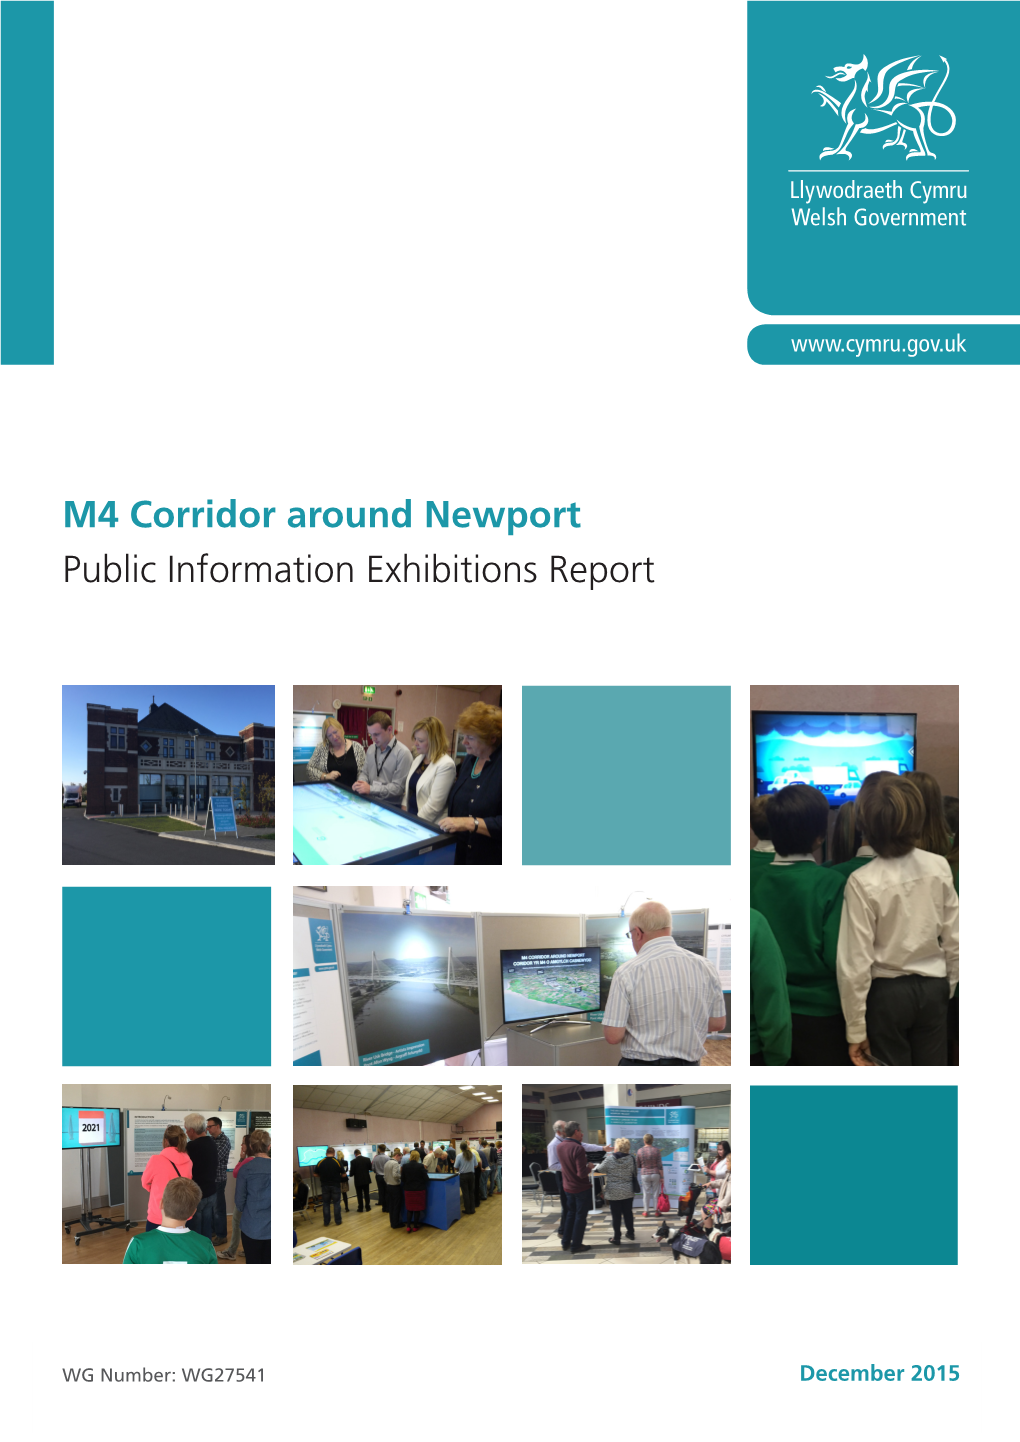 M4 Corridor Around Newport Public Information Exhibitions Report